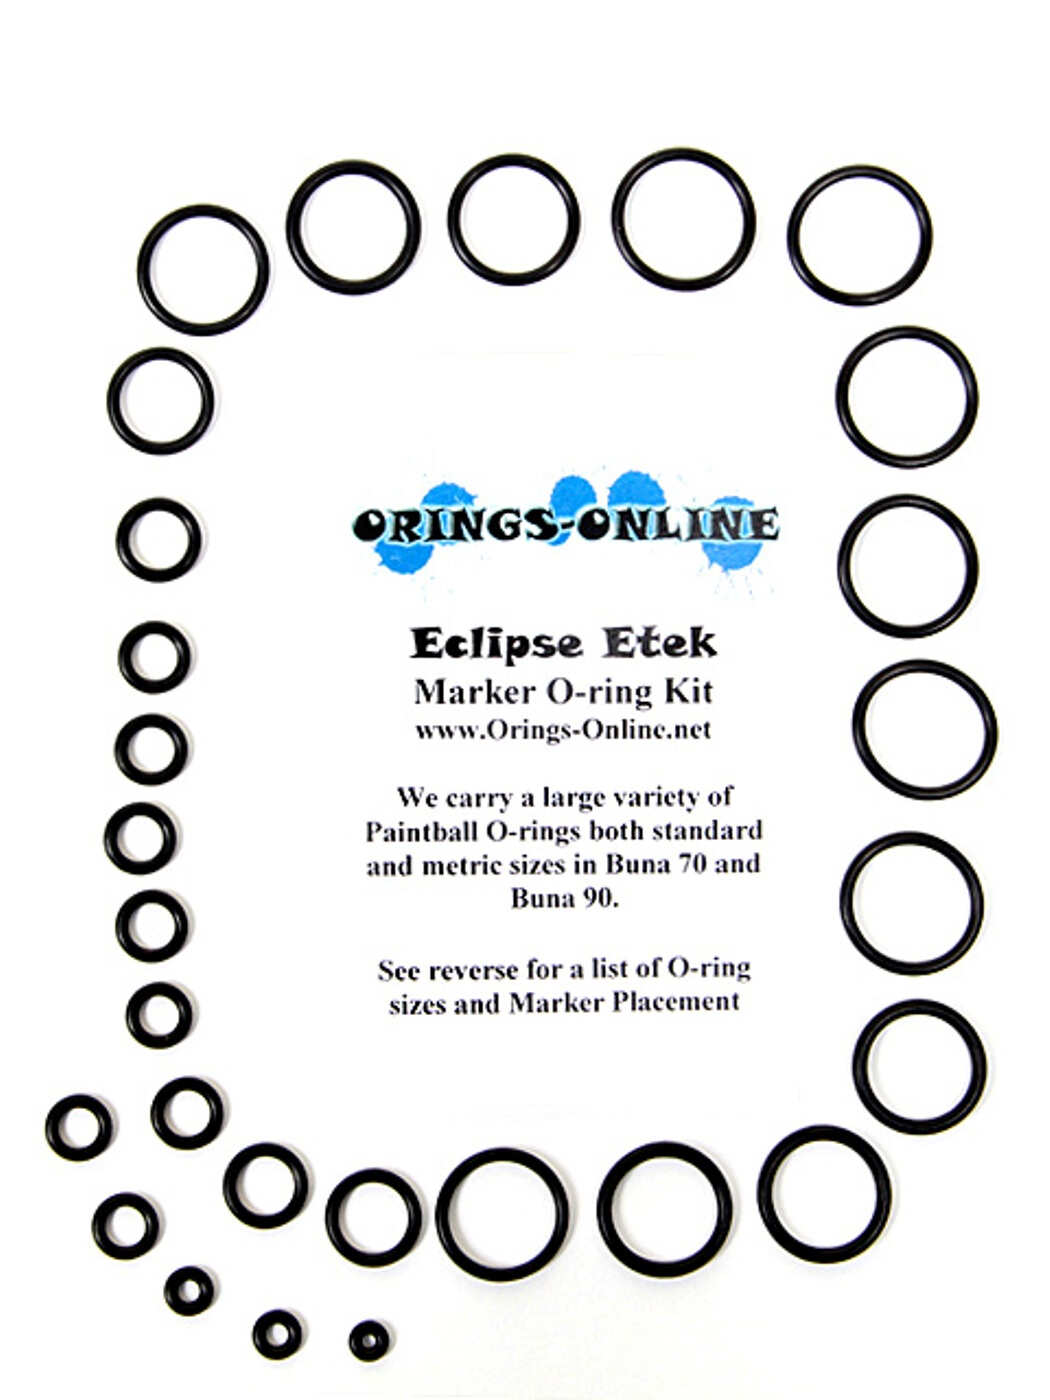 Planet Eclipse Etek Marker O-ring Kit